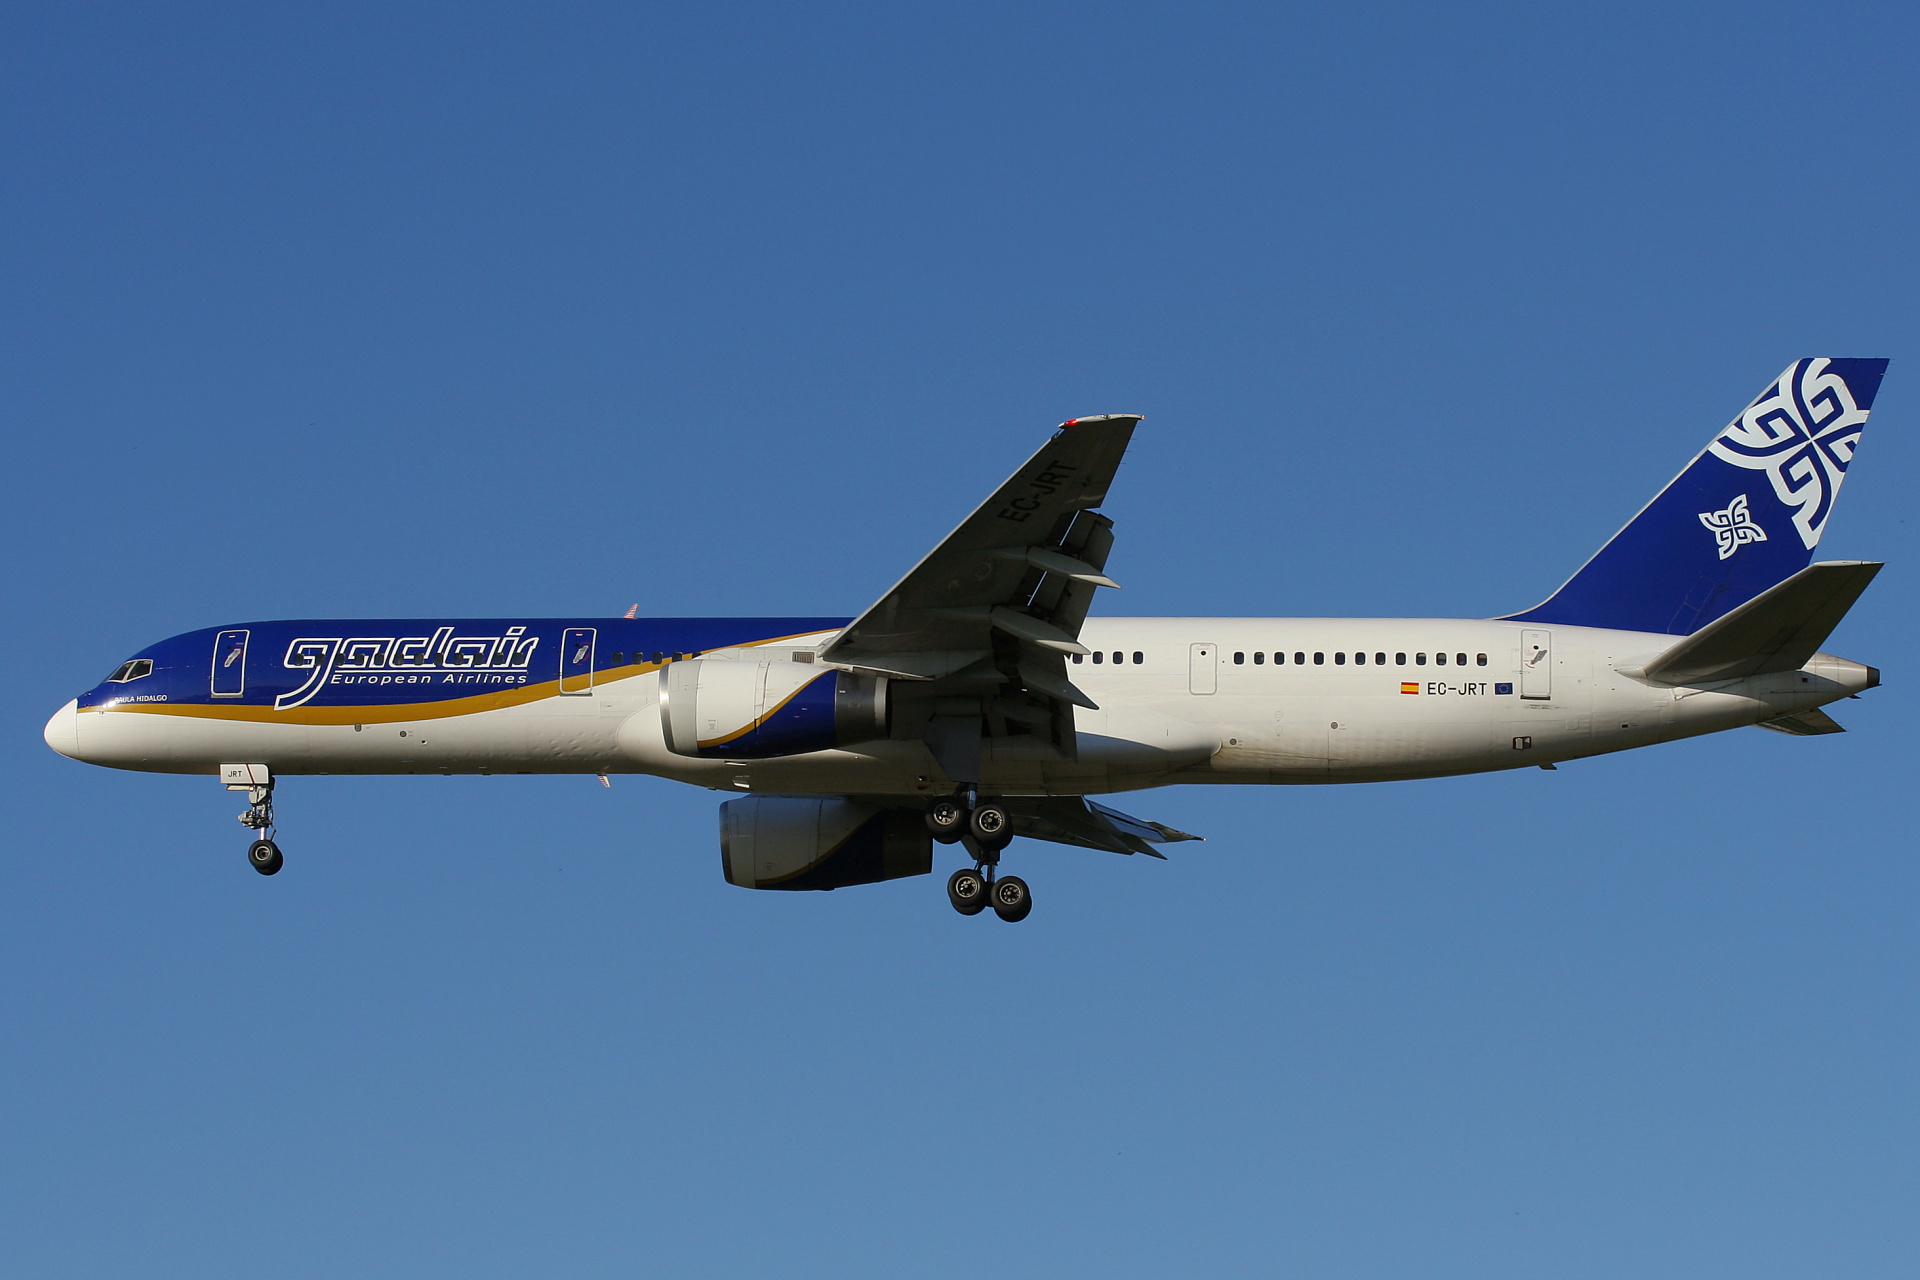 EC-JRT, Gadair European Airlines (Aircraft » EPWA Spotting » Boeing 757-200)